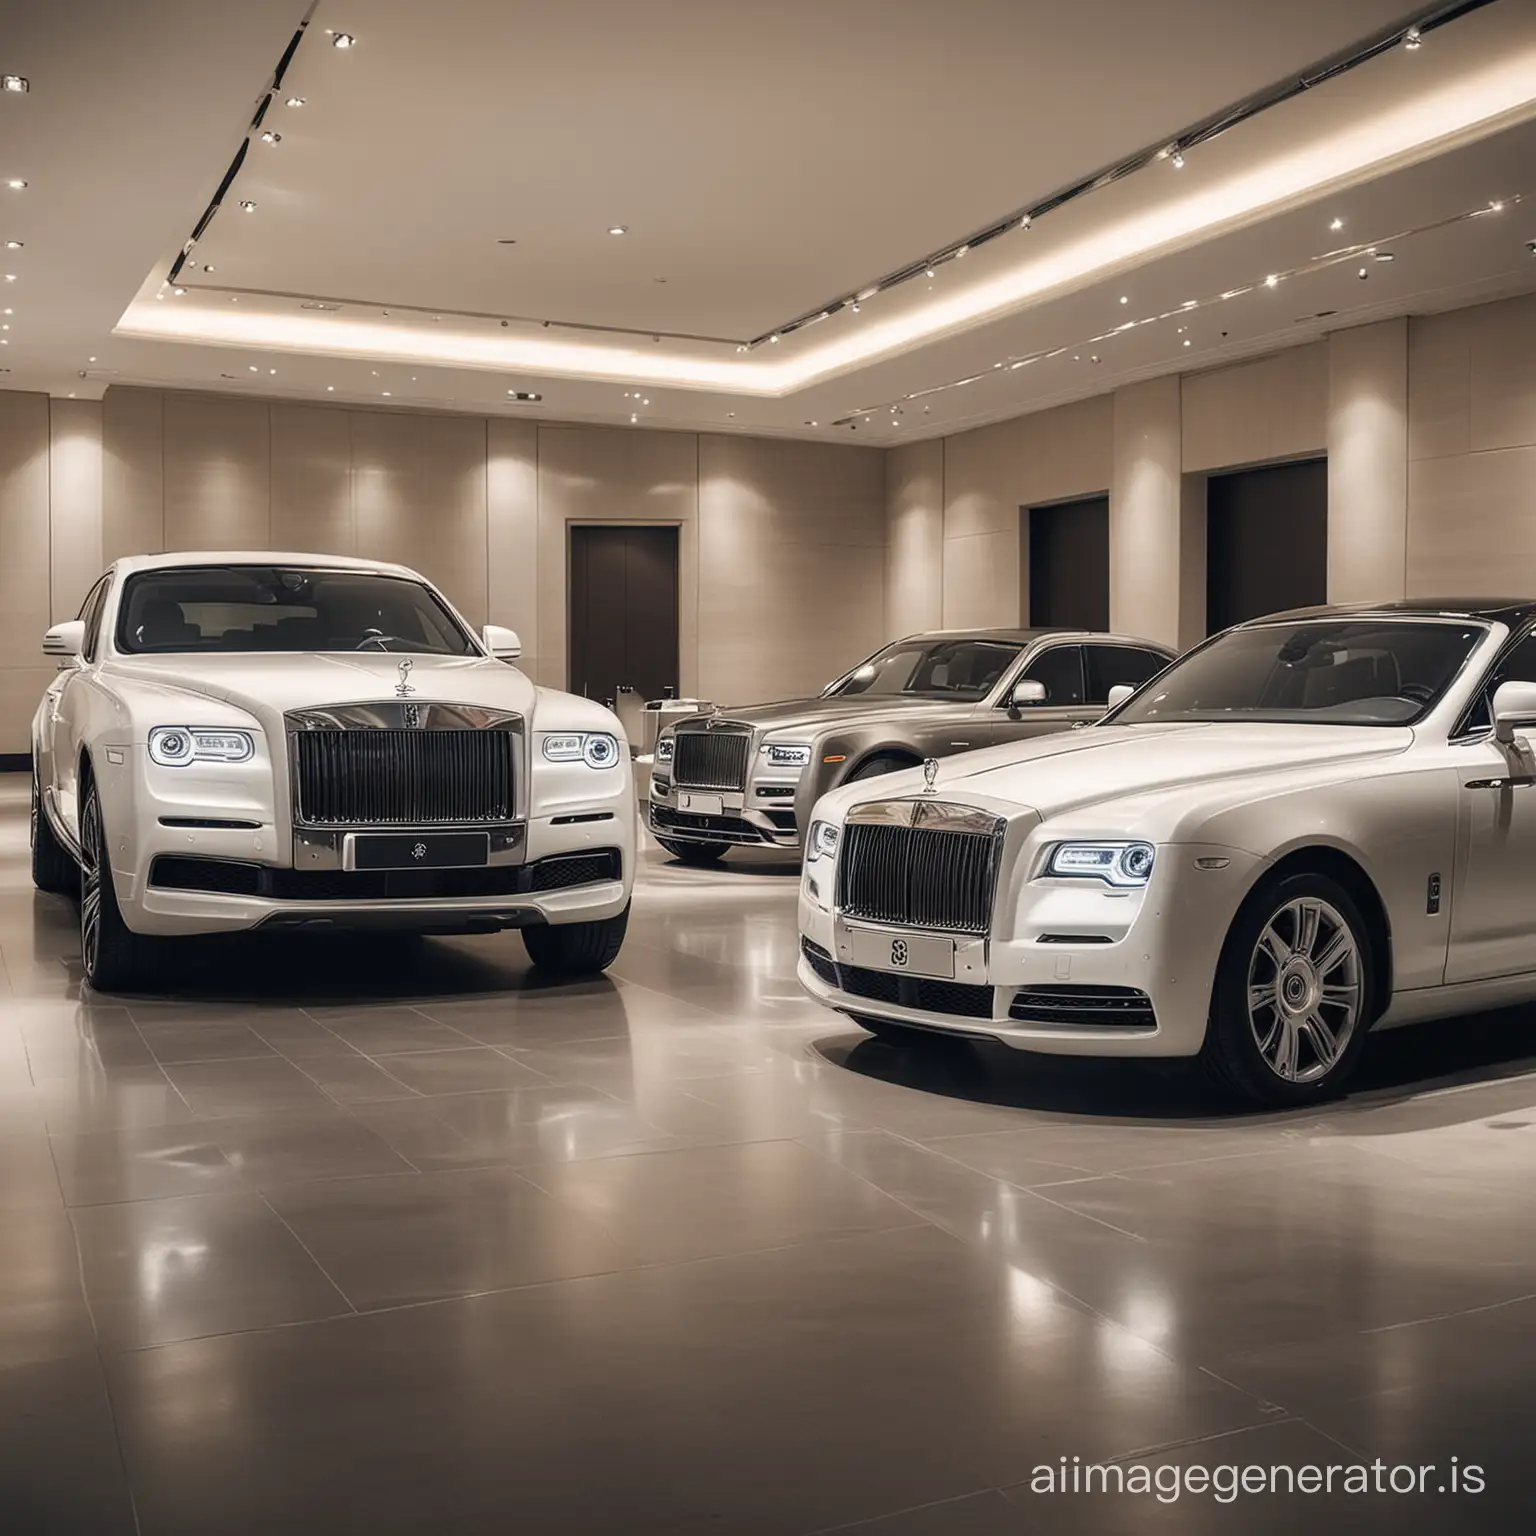 elegant lineup of luxury vehicles: Rolls-Royce, Mercedes-Benz, BMW in a brightly lit luxury room